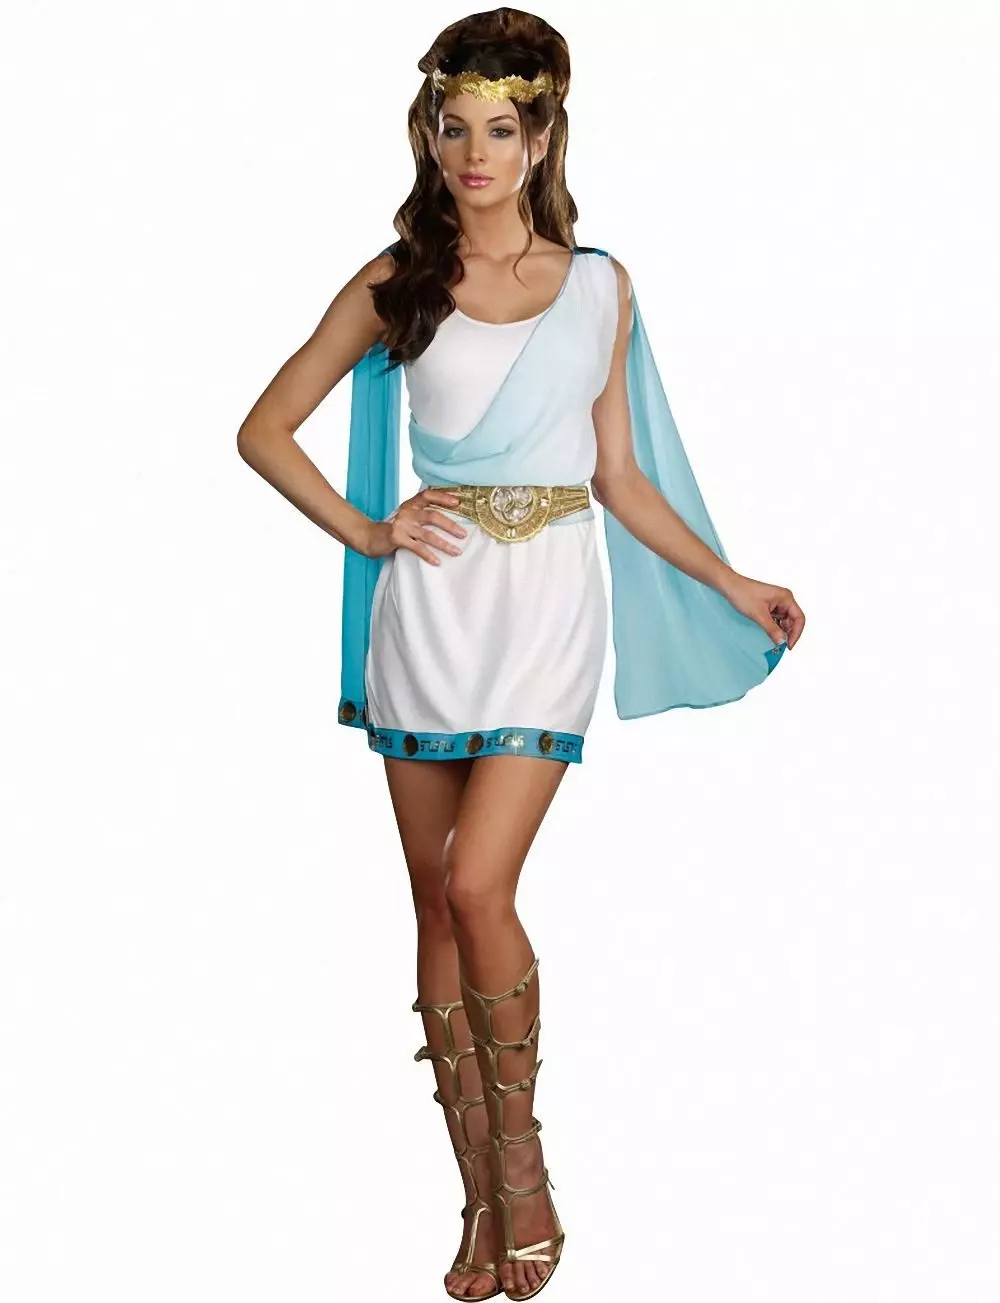 تونیک یونانی (51 عکس): لباس زنانه در سبک یونانی، لباس پوشیدنی با نقوش یونانی 14556_5